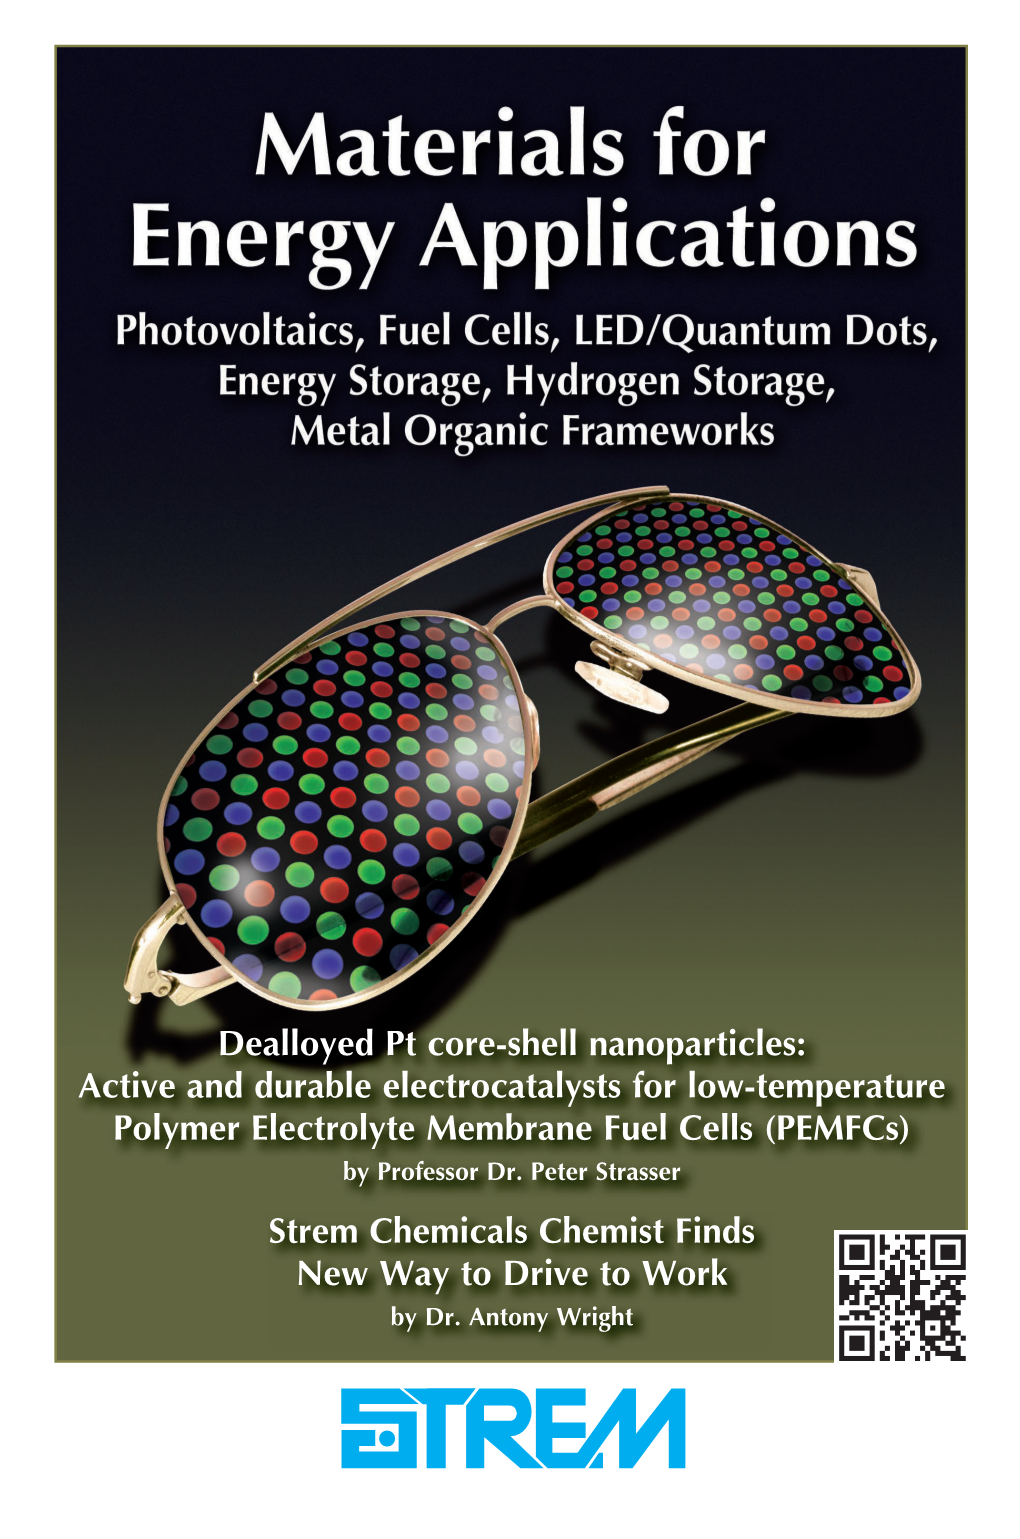 Dealloyed Pt Core-Shell Nanoparticles